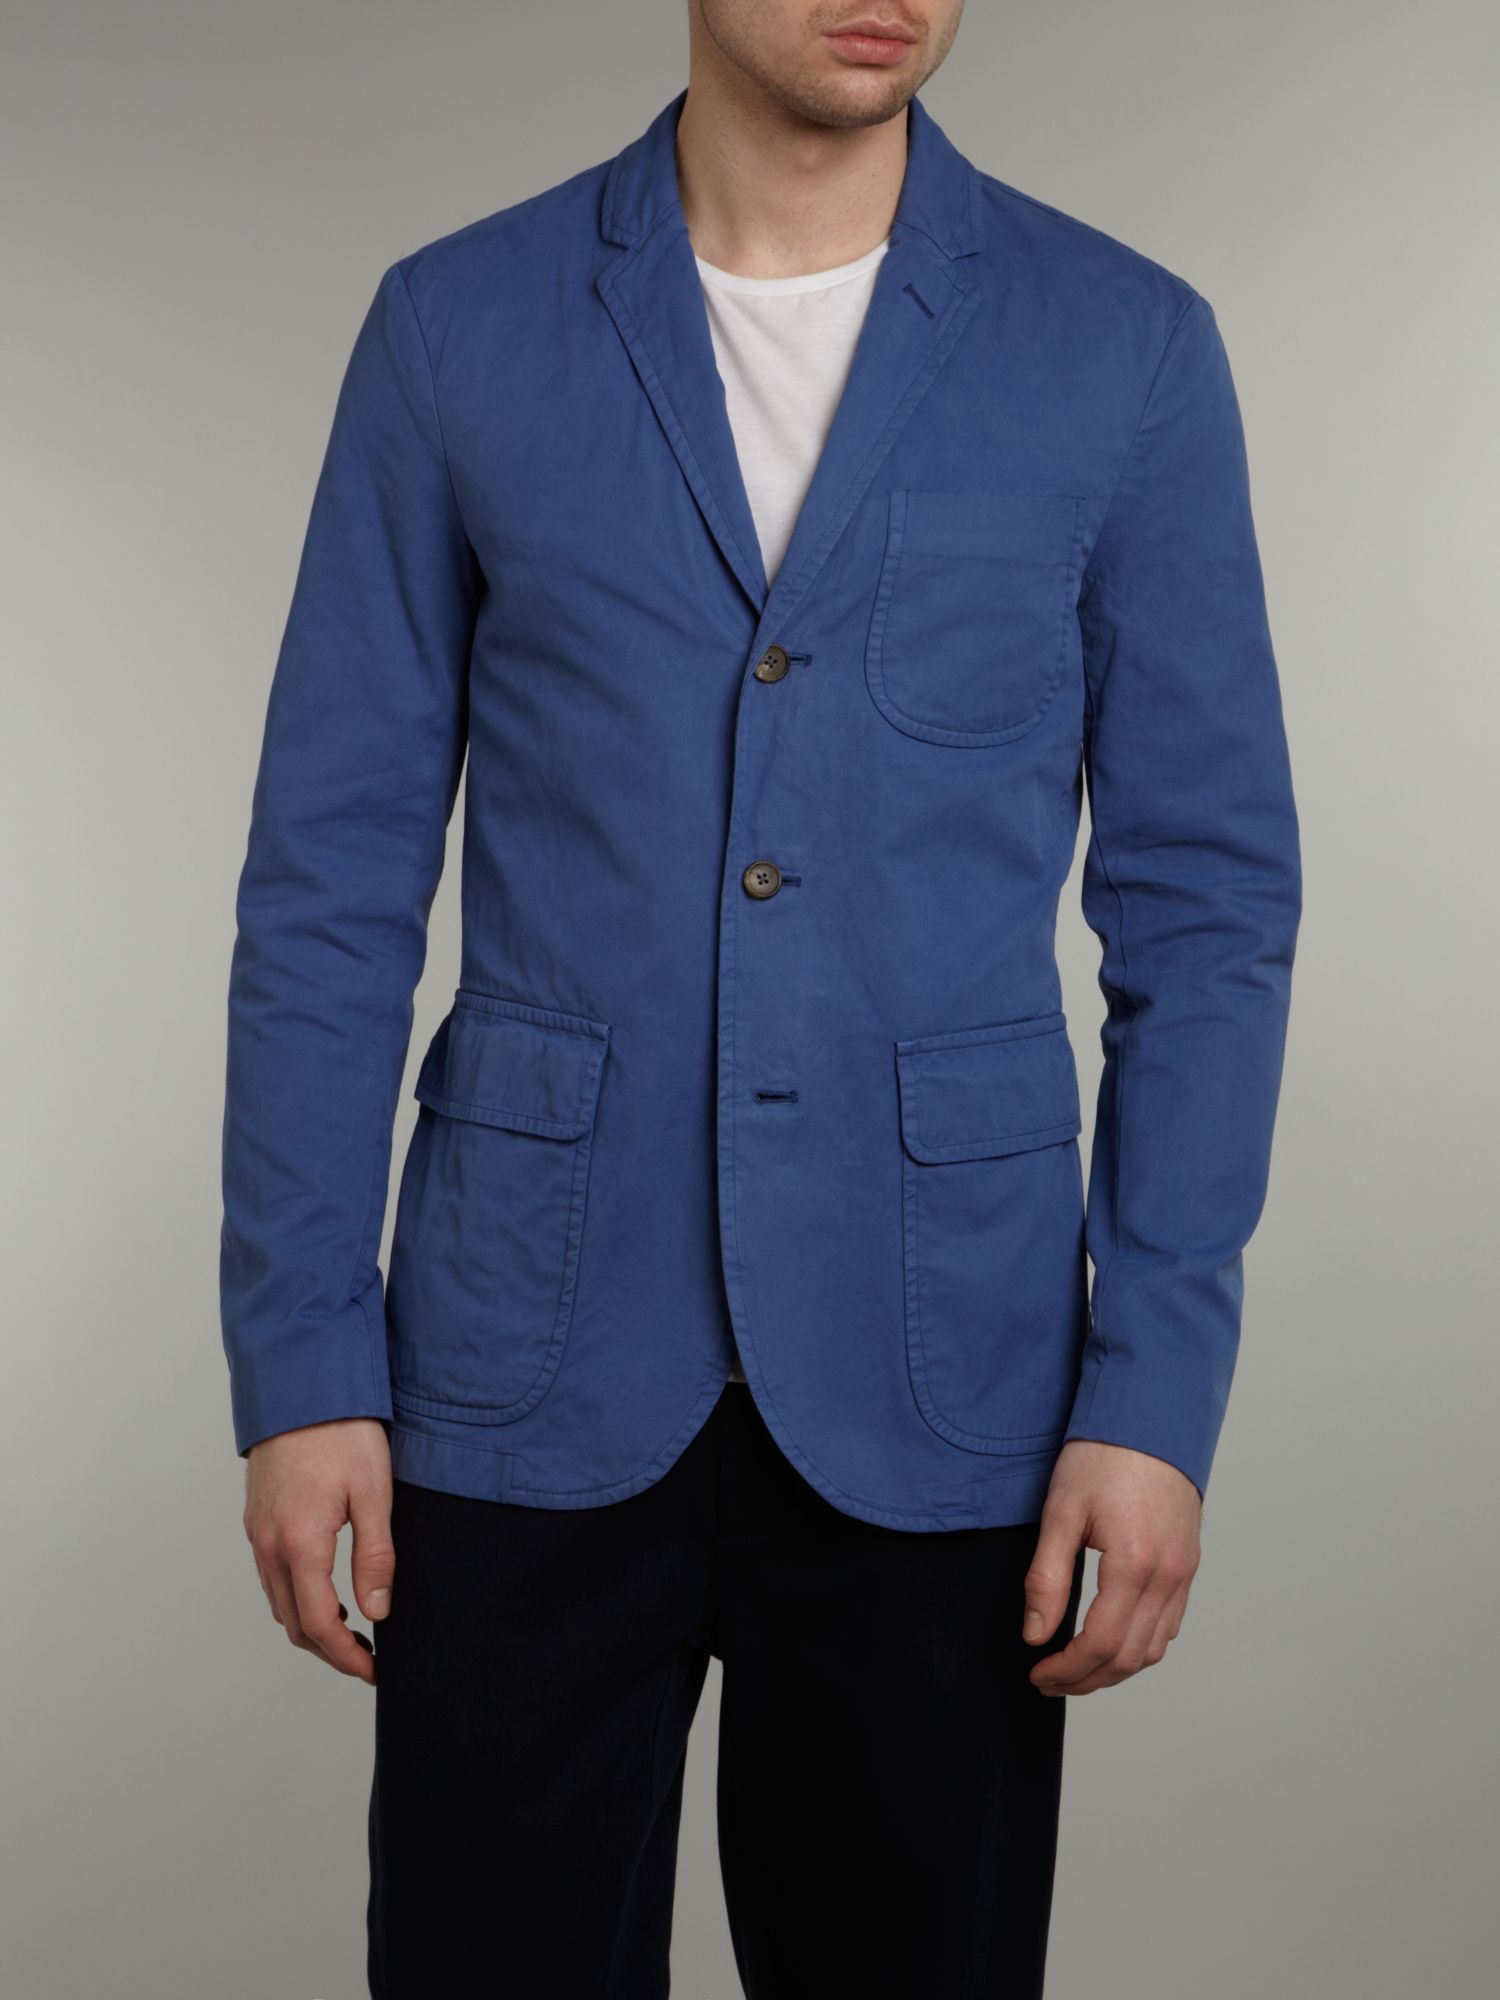 Polo ralph lauren Langley Sports Coat in Blue for Men | Lyst